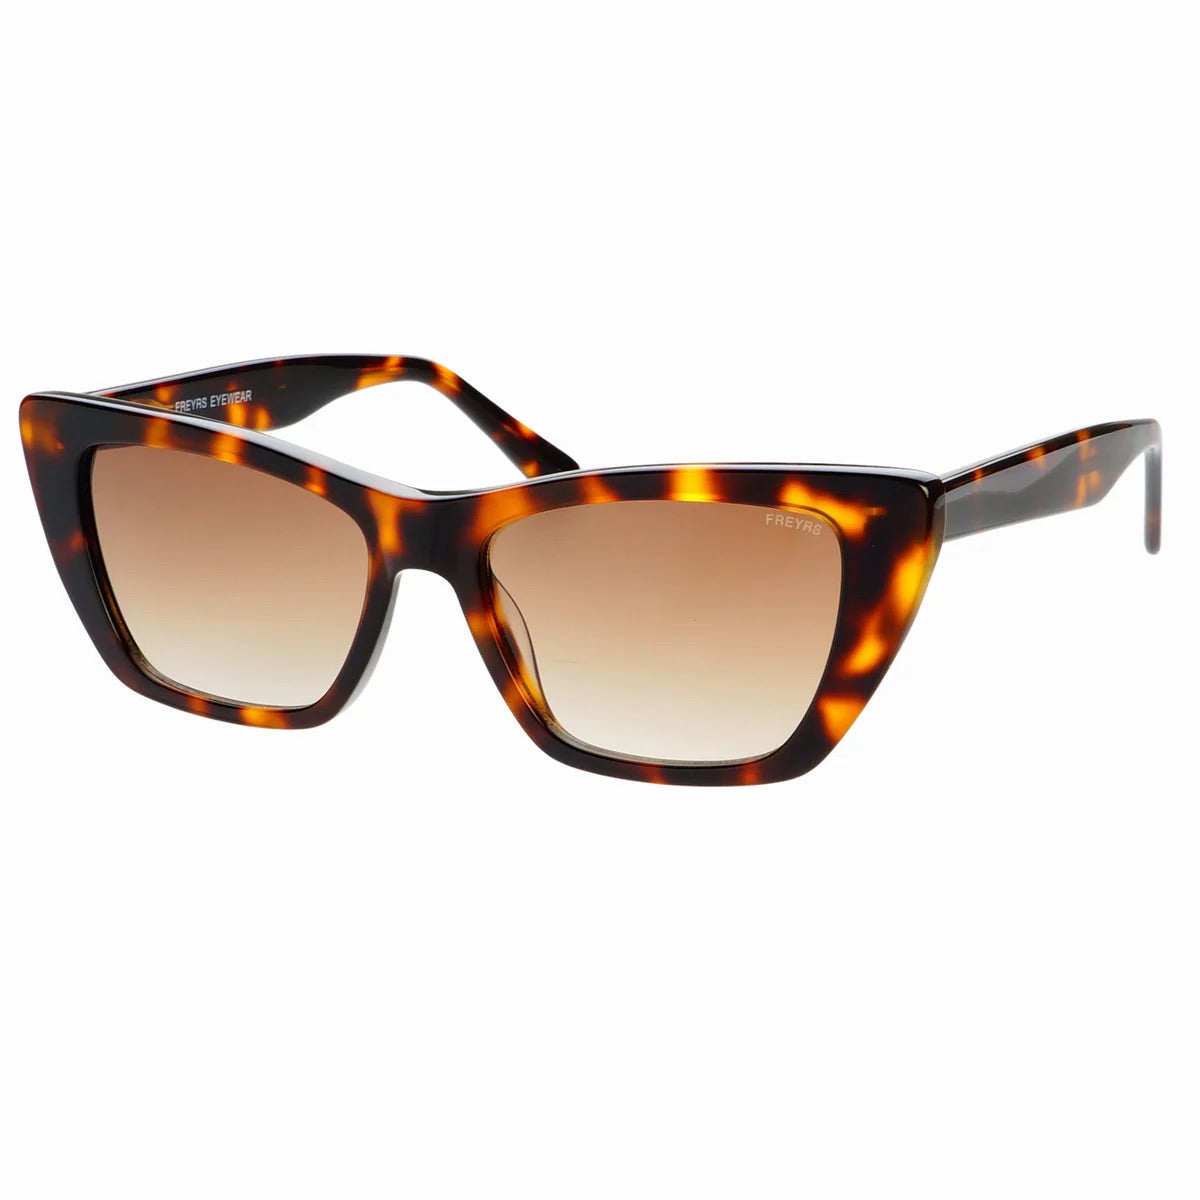 Freyrs April Sunglasses